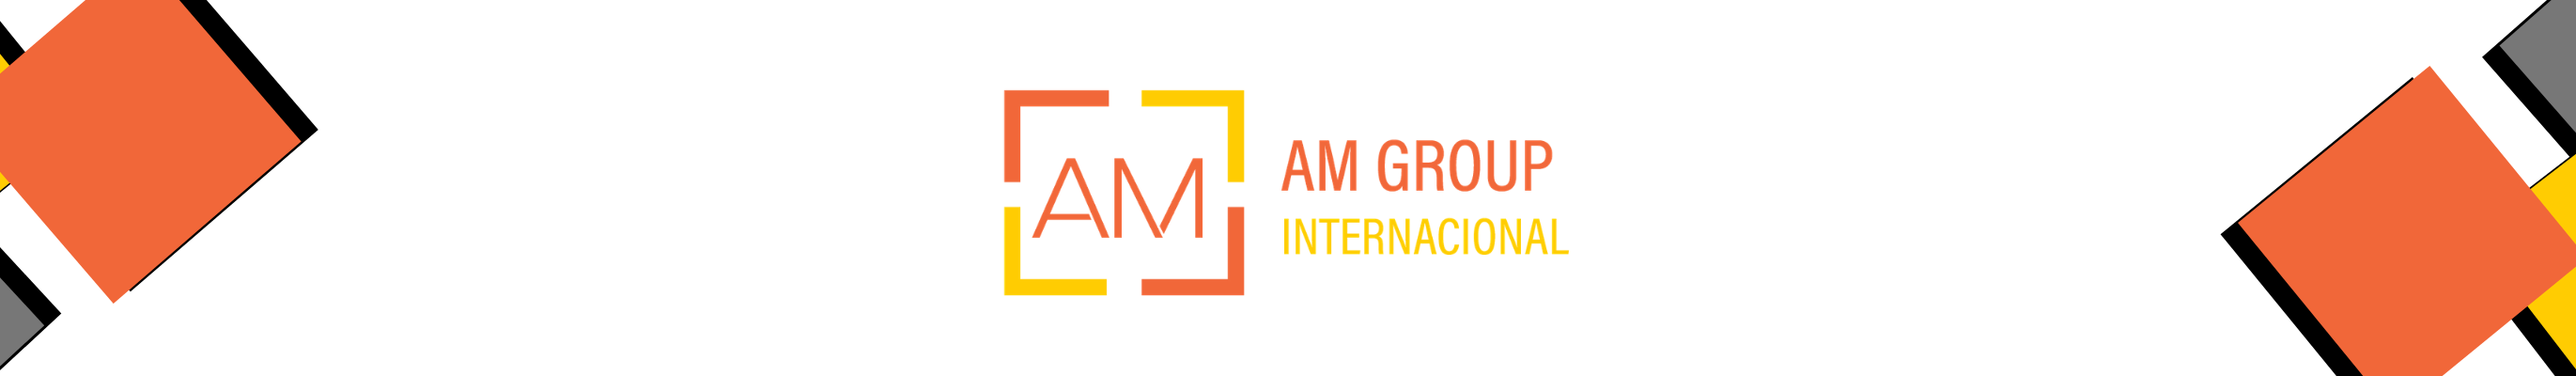 AM Group Internacional's profile banner